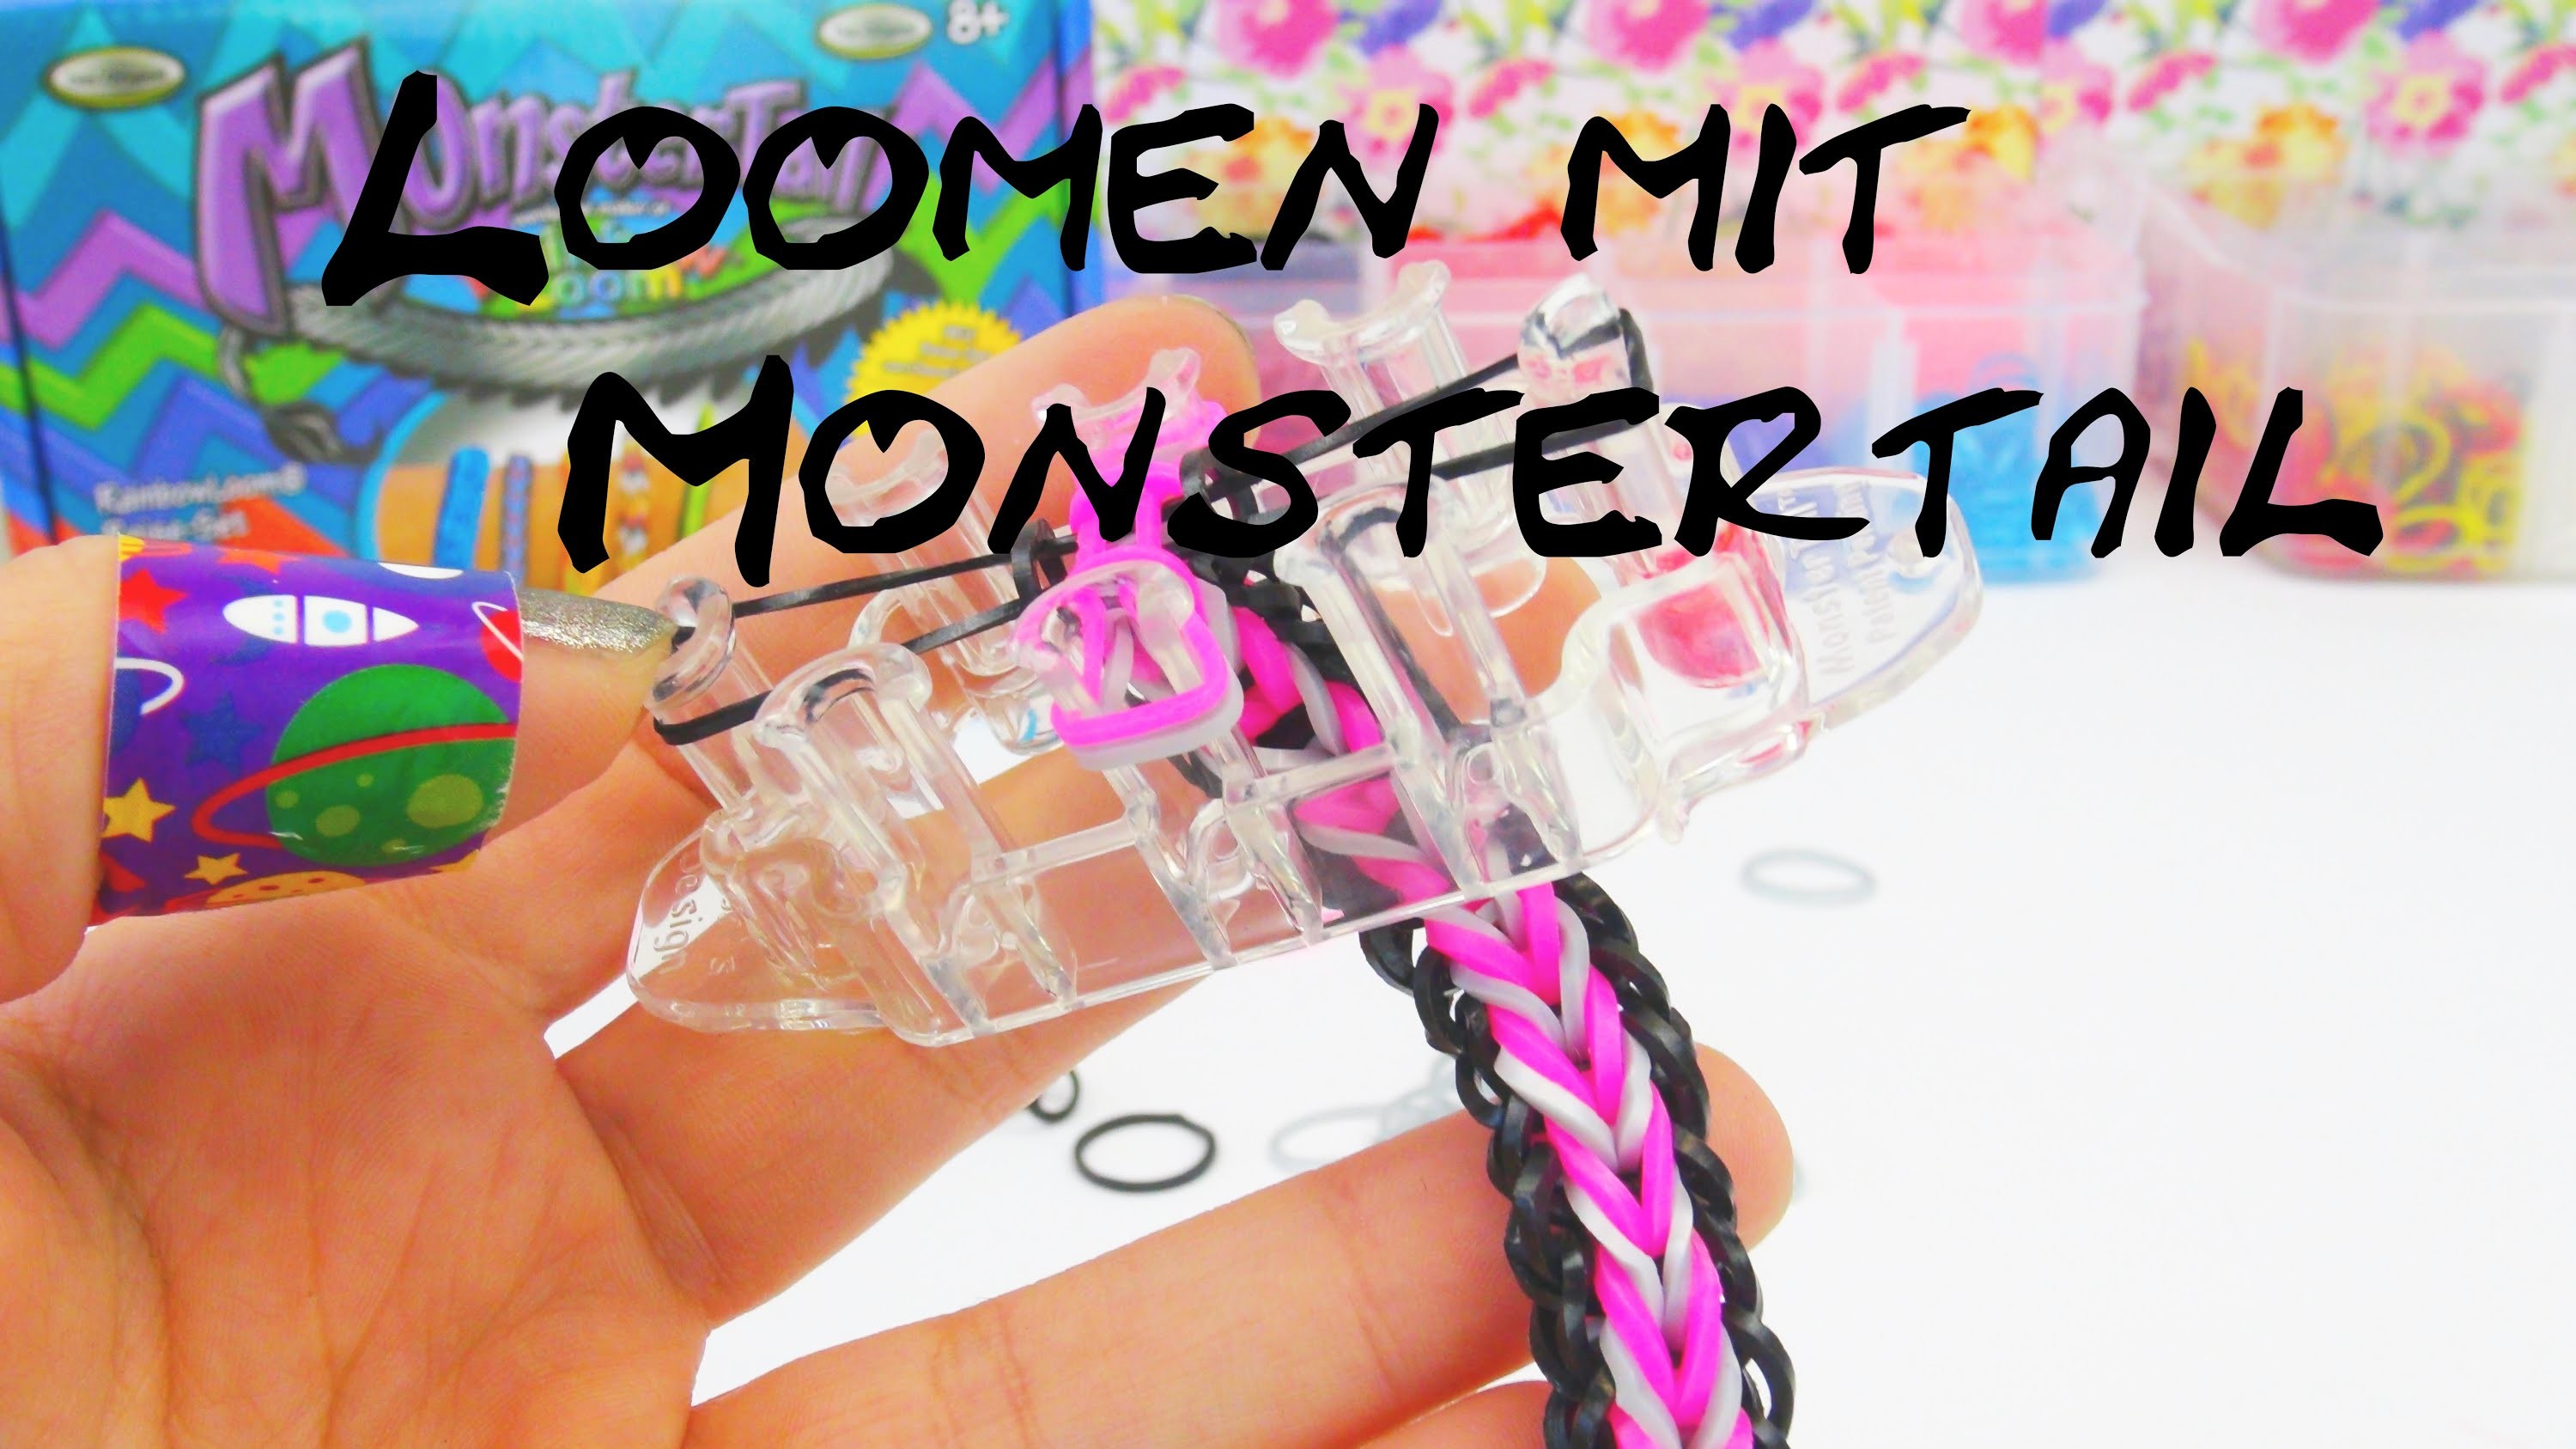 Rainbow Loom Monster Tail Fishtail Bracelet. Armband Loom Bands mit Monster Tail Tutorial | deutsch